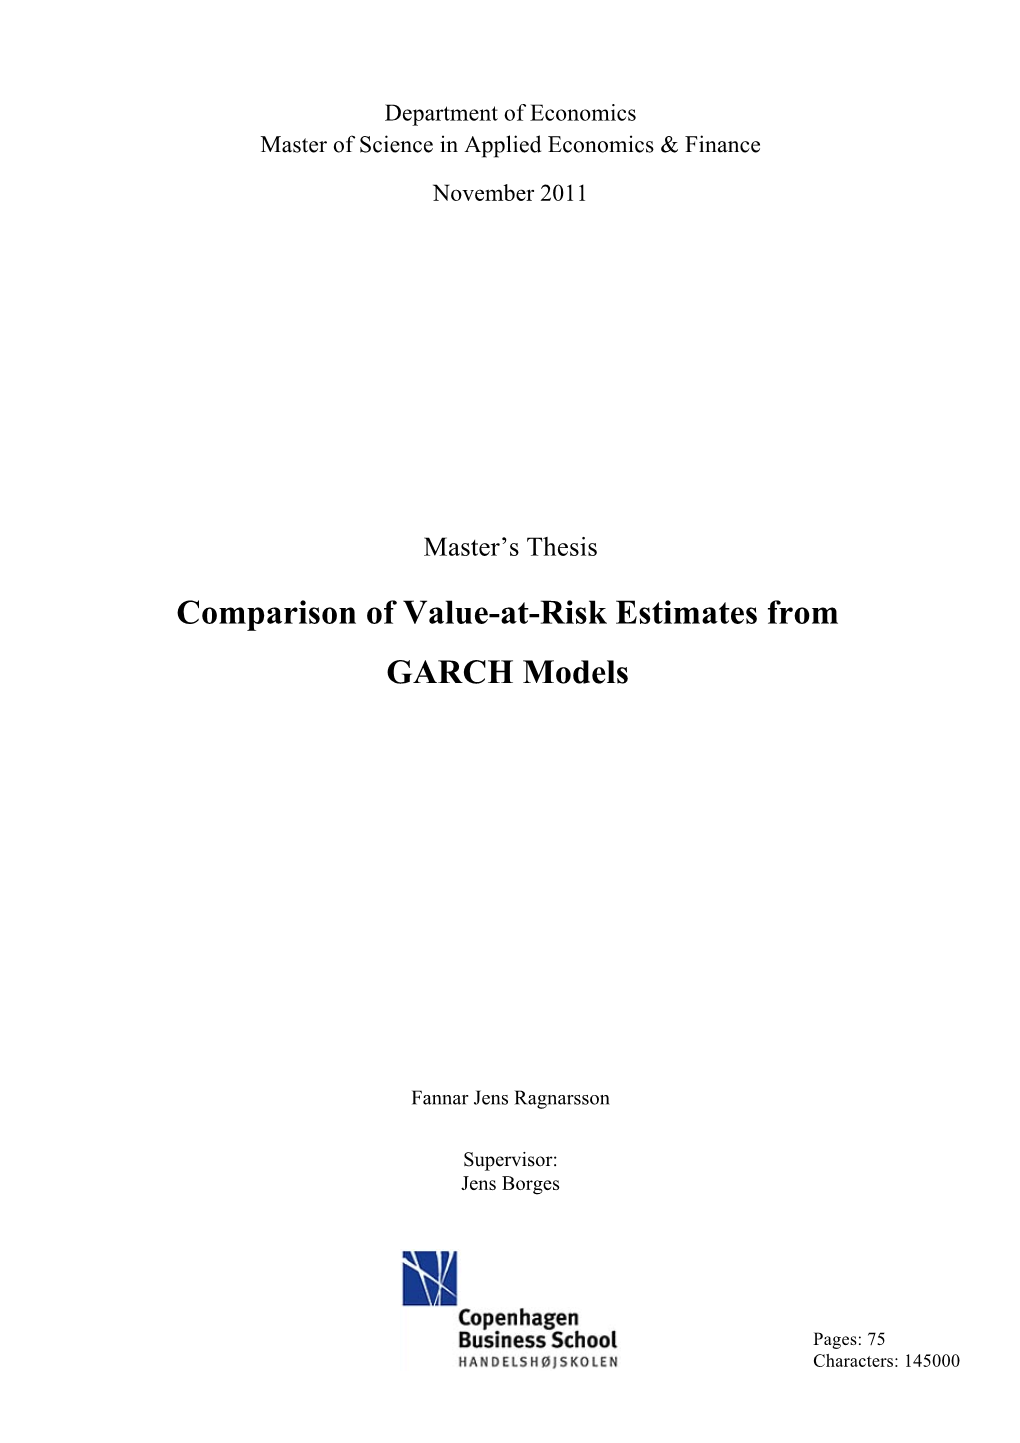 Comparison of Value-At-Risk Estimates from GARCH Models